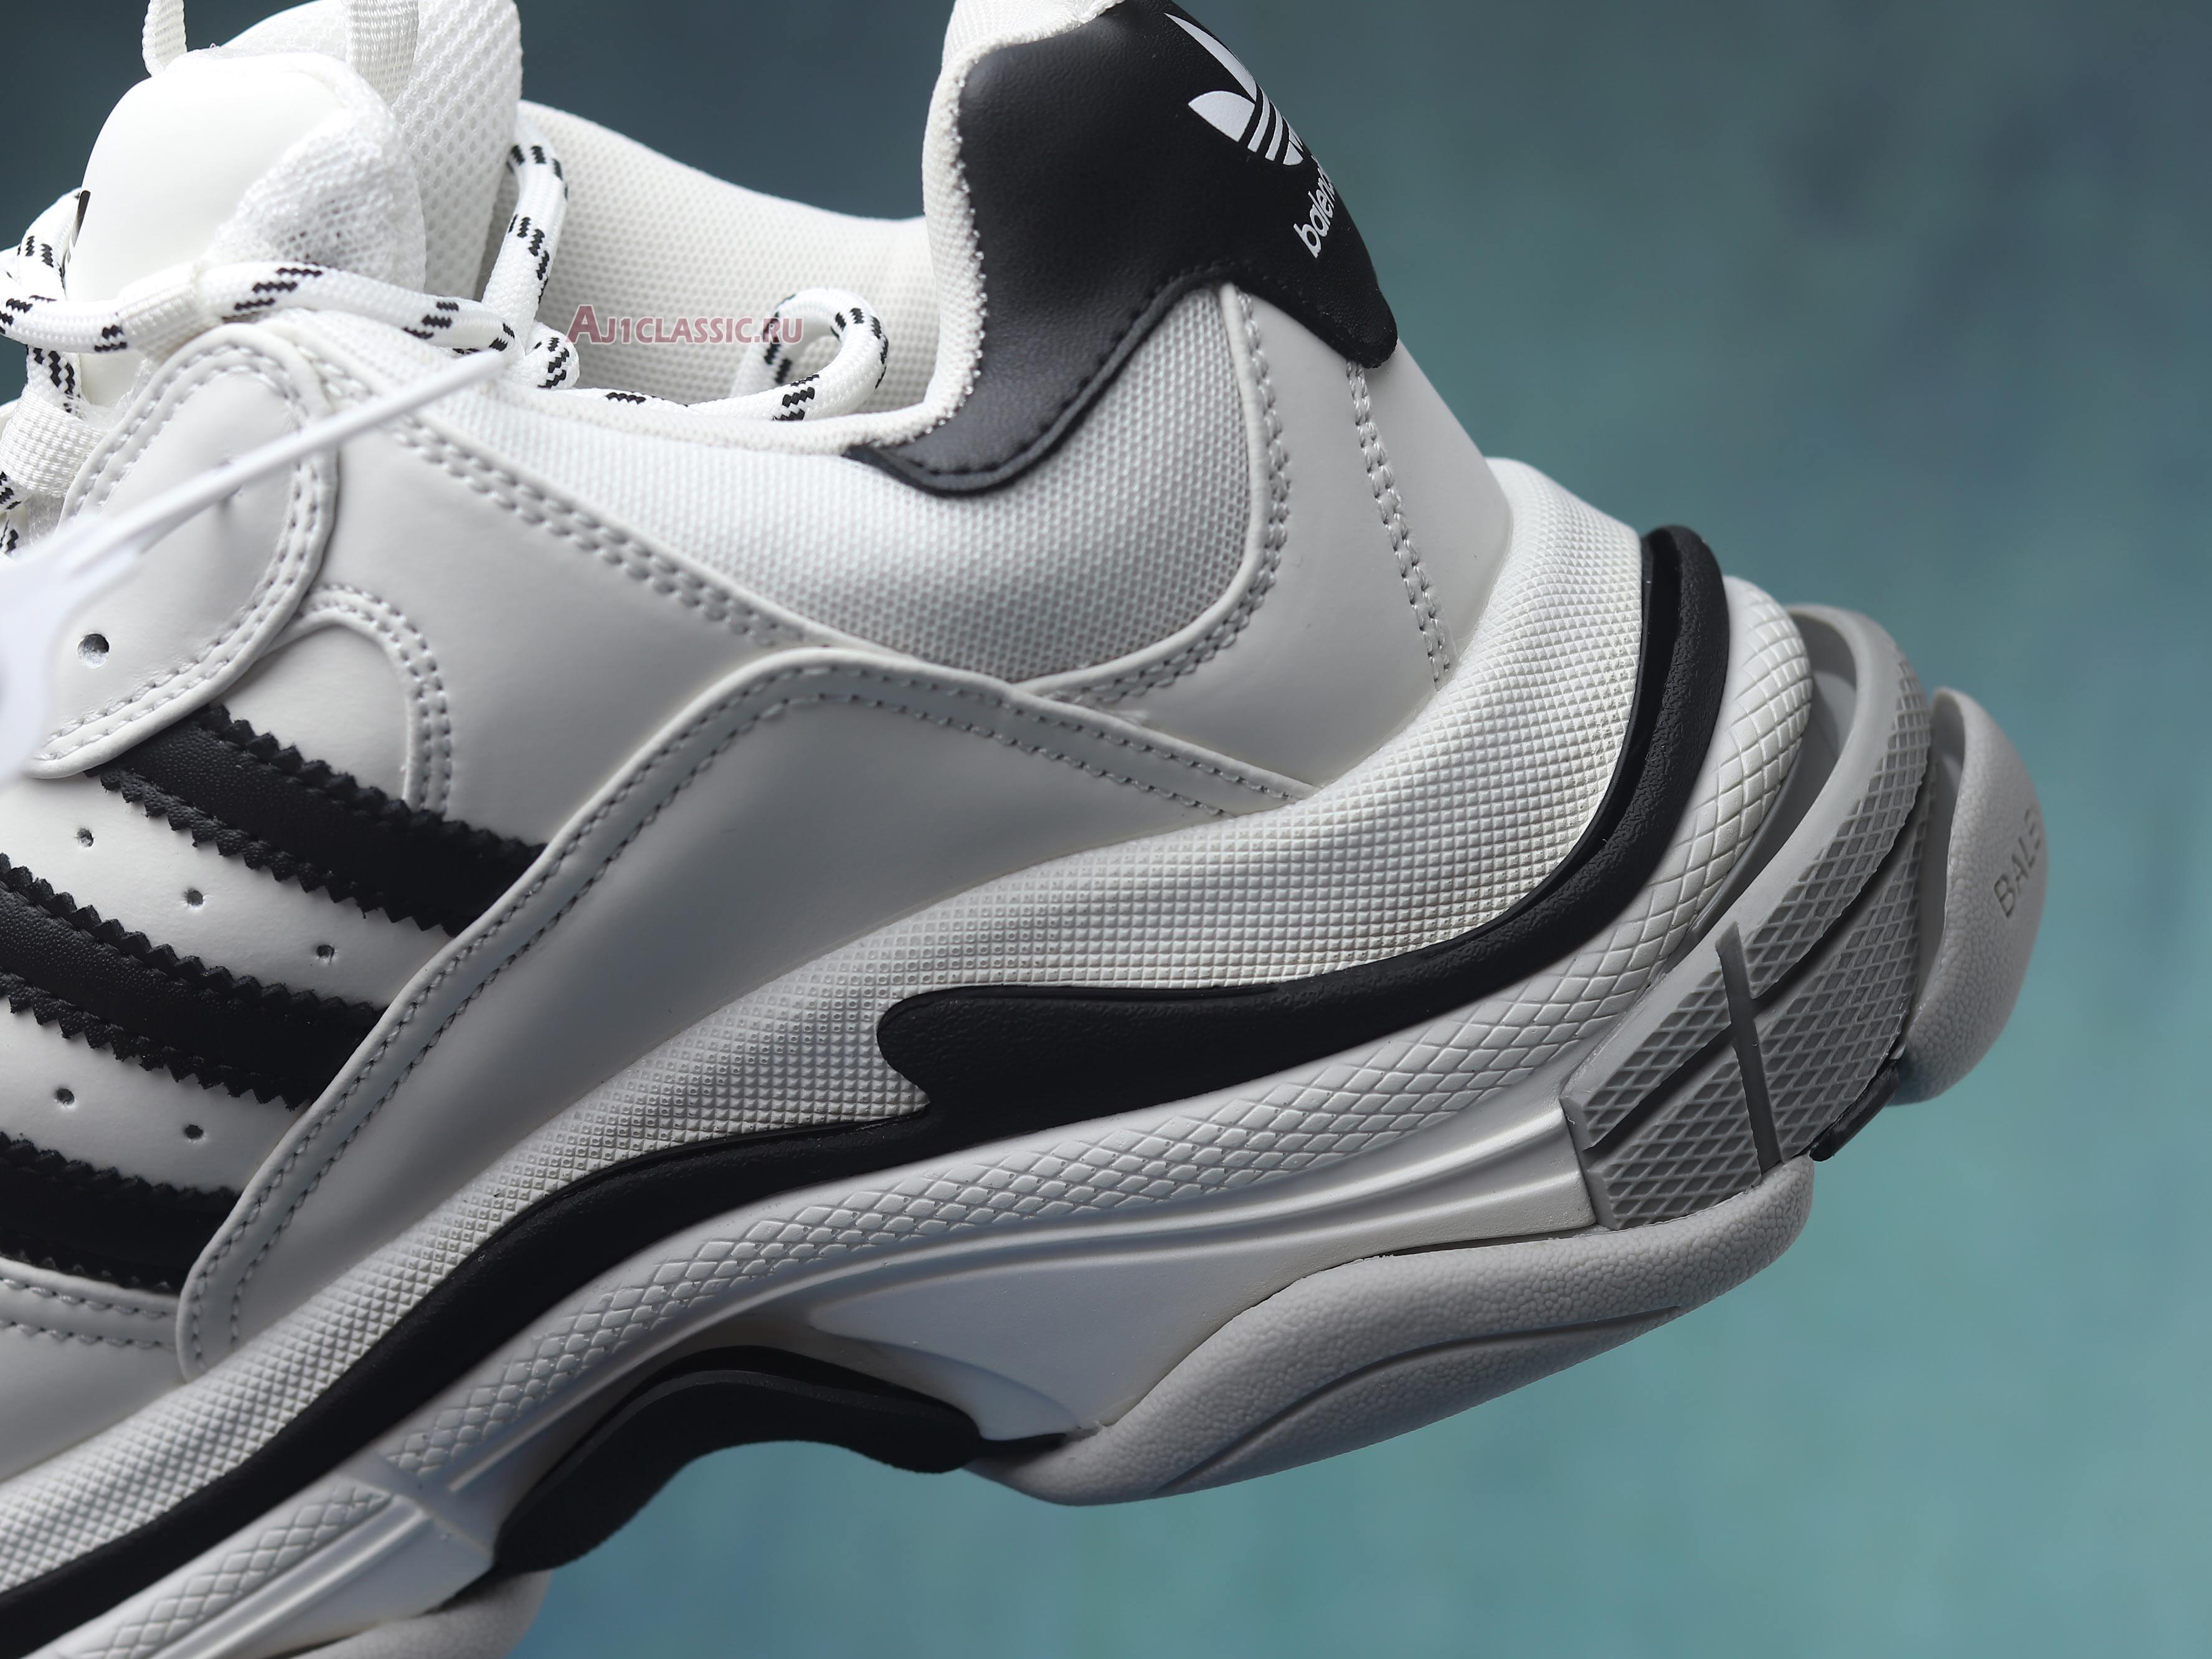 Adidas x Balenciaga Triple S Sneaker "White" 710021 W2ZB1 9112